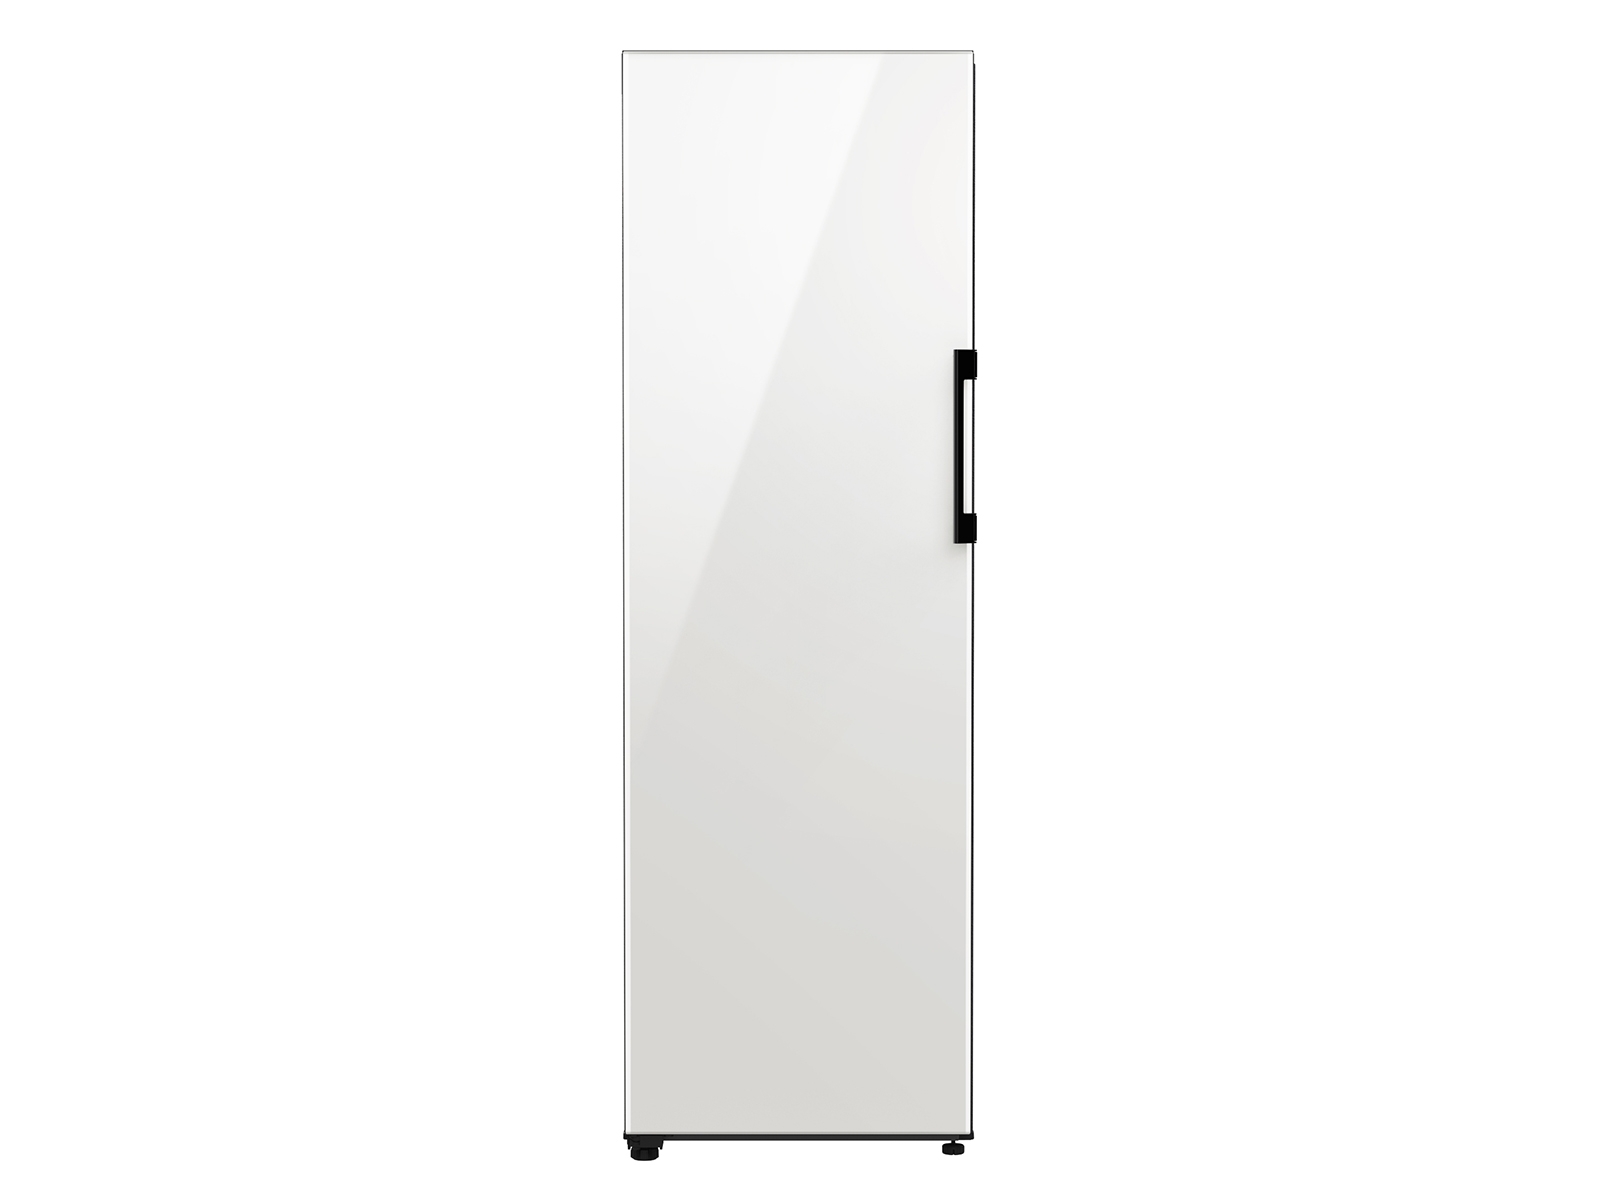 https://image-us.samsung.com/SamsungUS/home/home-appliances/refrigerators/pdp/rz11t747435-aa/360/RZ11T747435-01.jpg?$product-details-jpg$